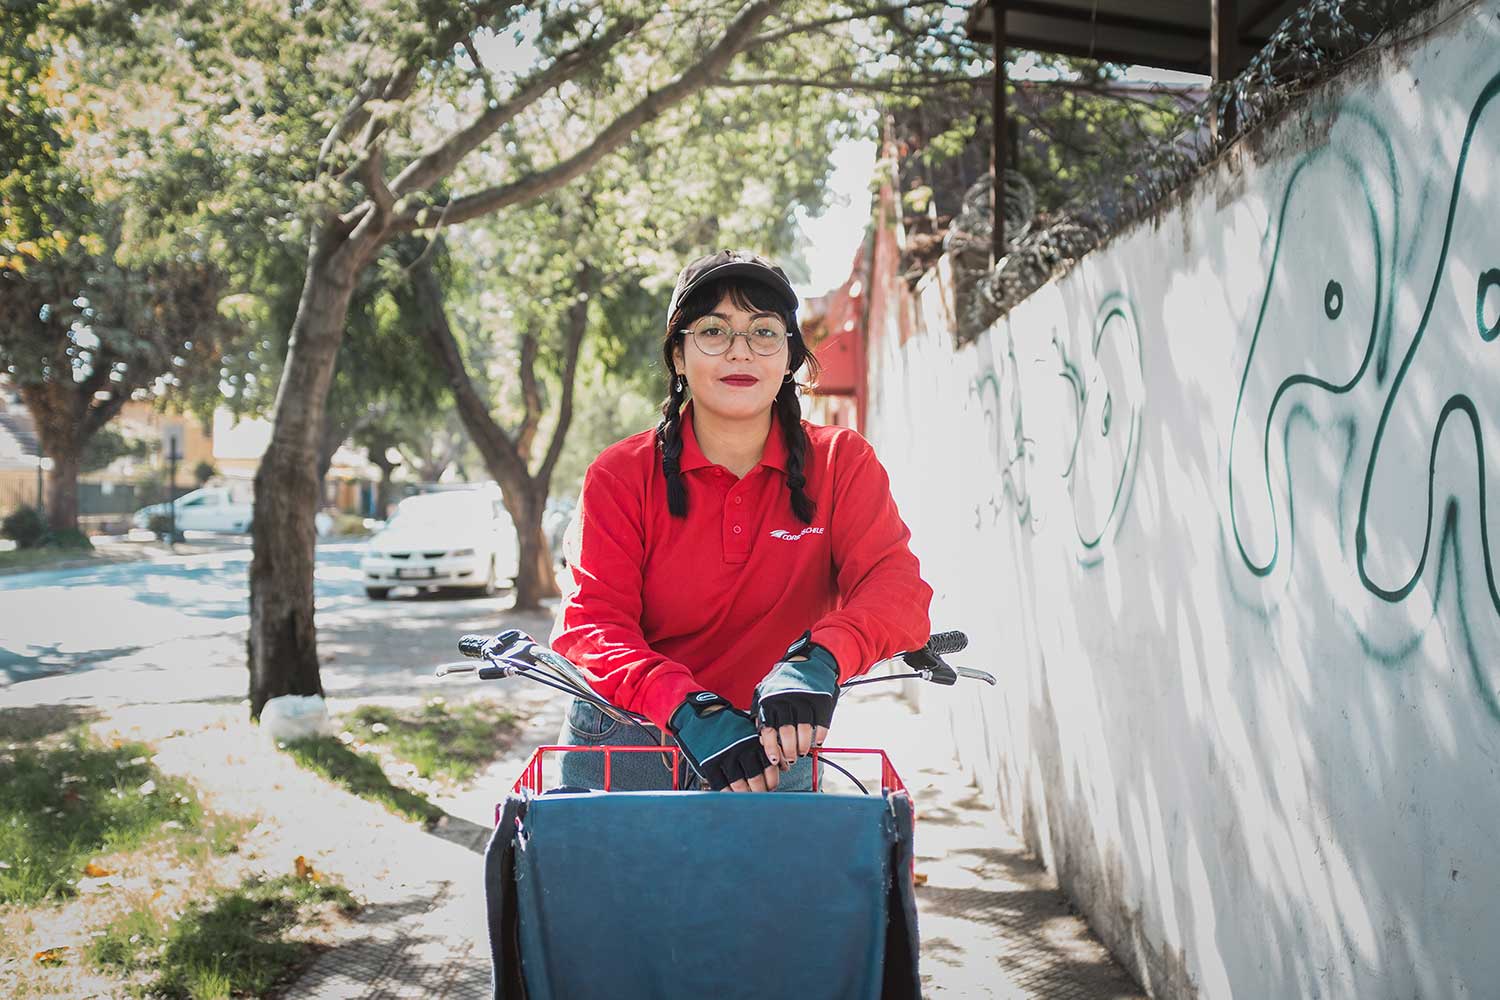 Camila posa con su bicicleta de correos